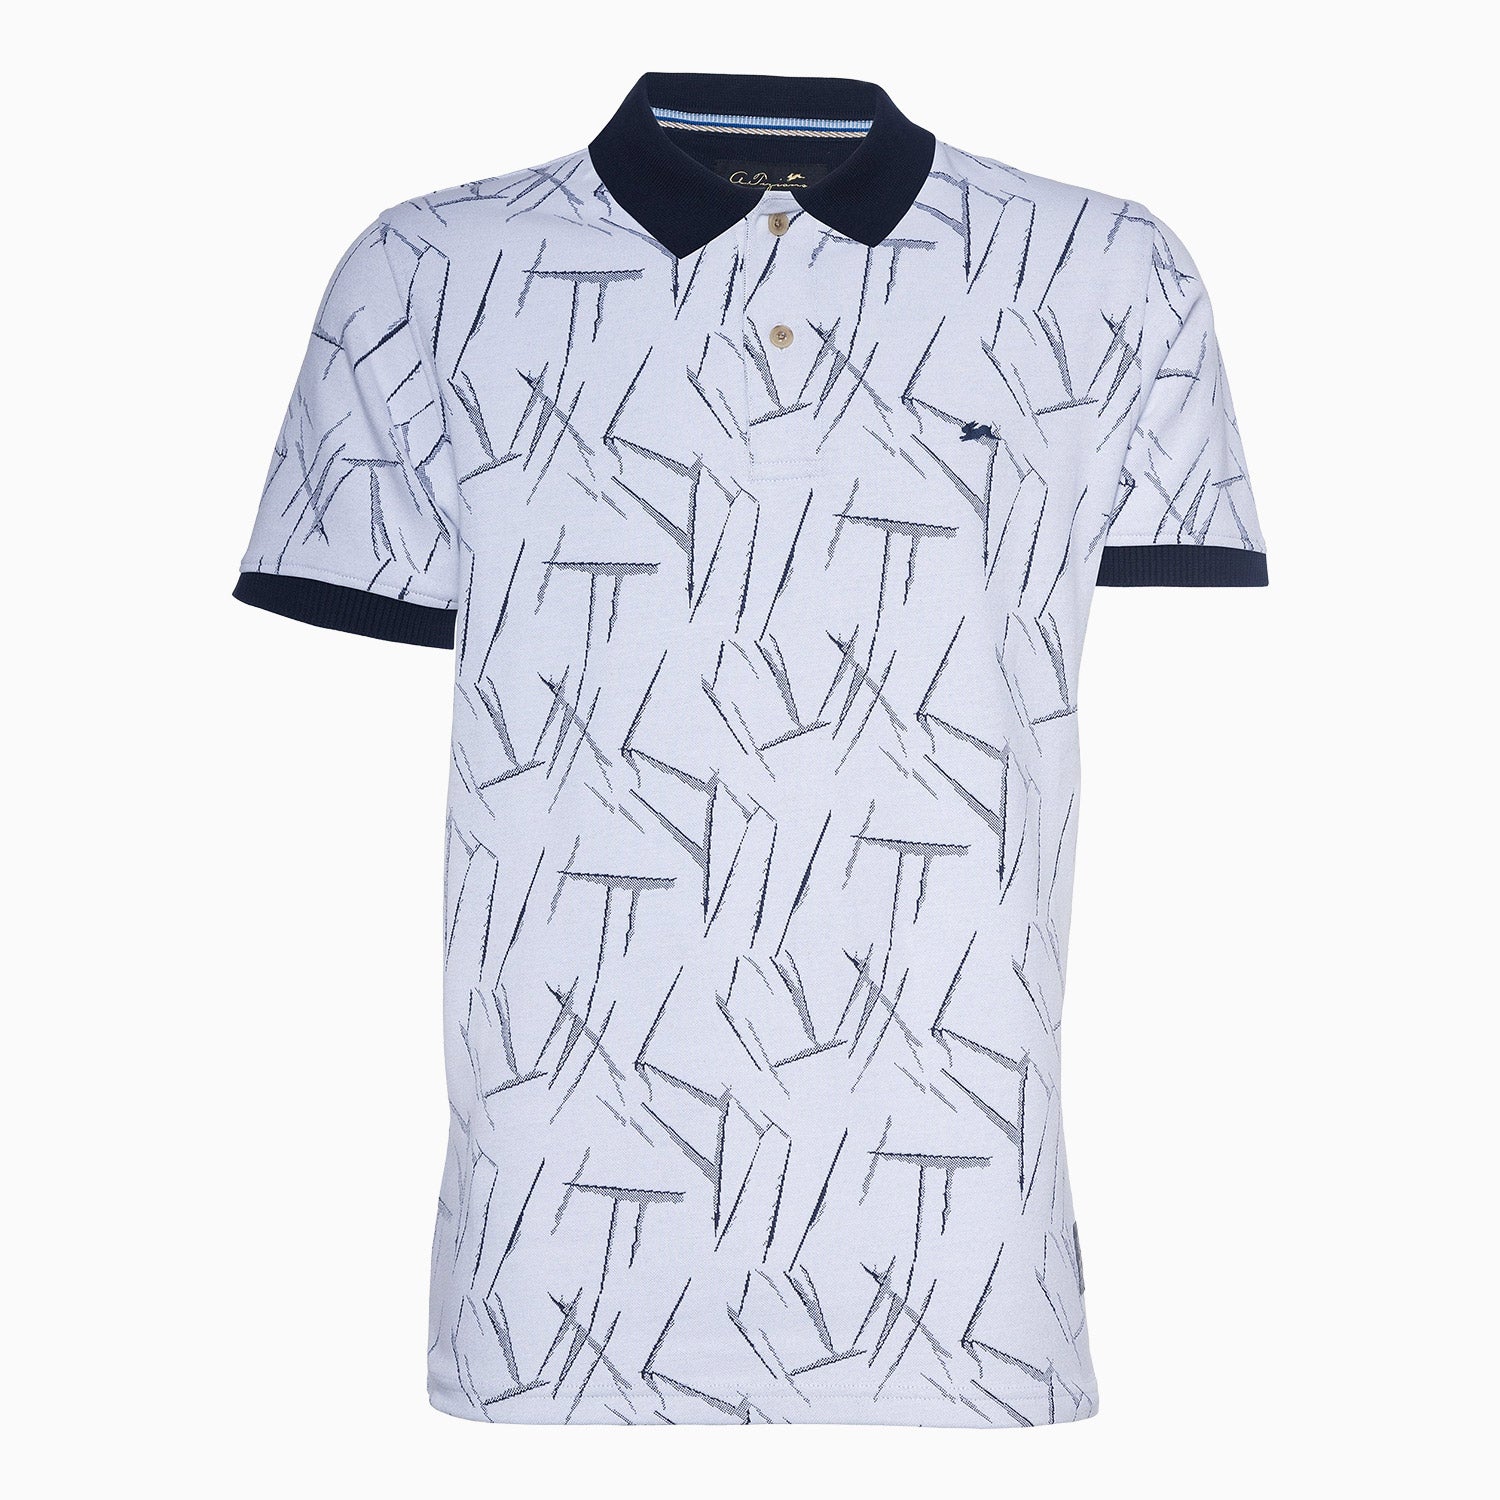 a-tiziano-mens-ridge-polo-shirt-41atm4202-wht